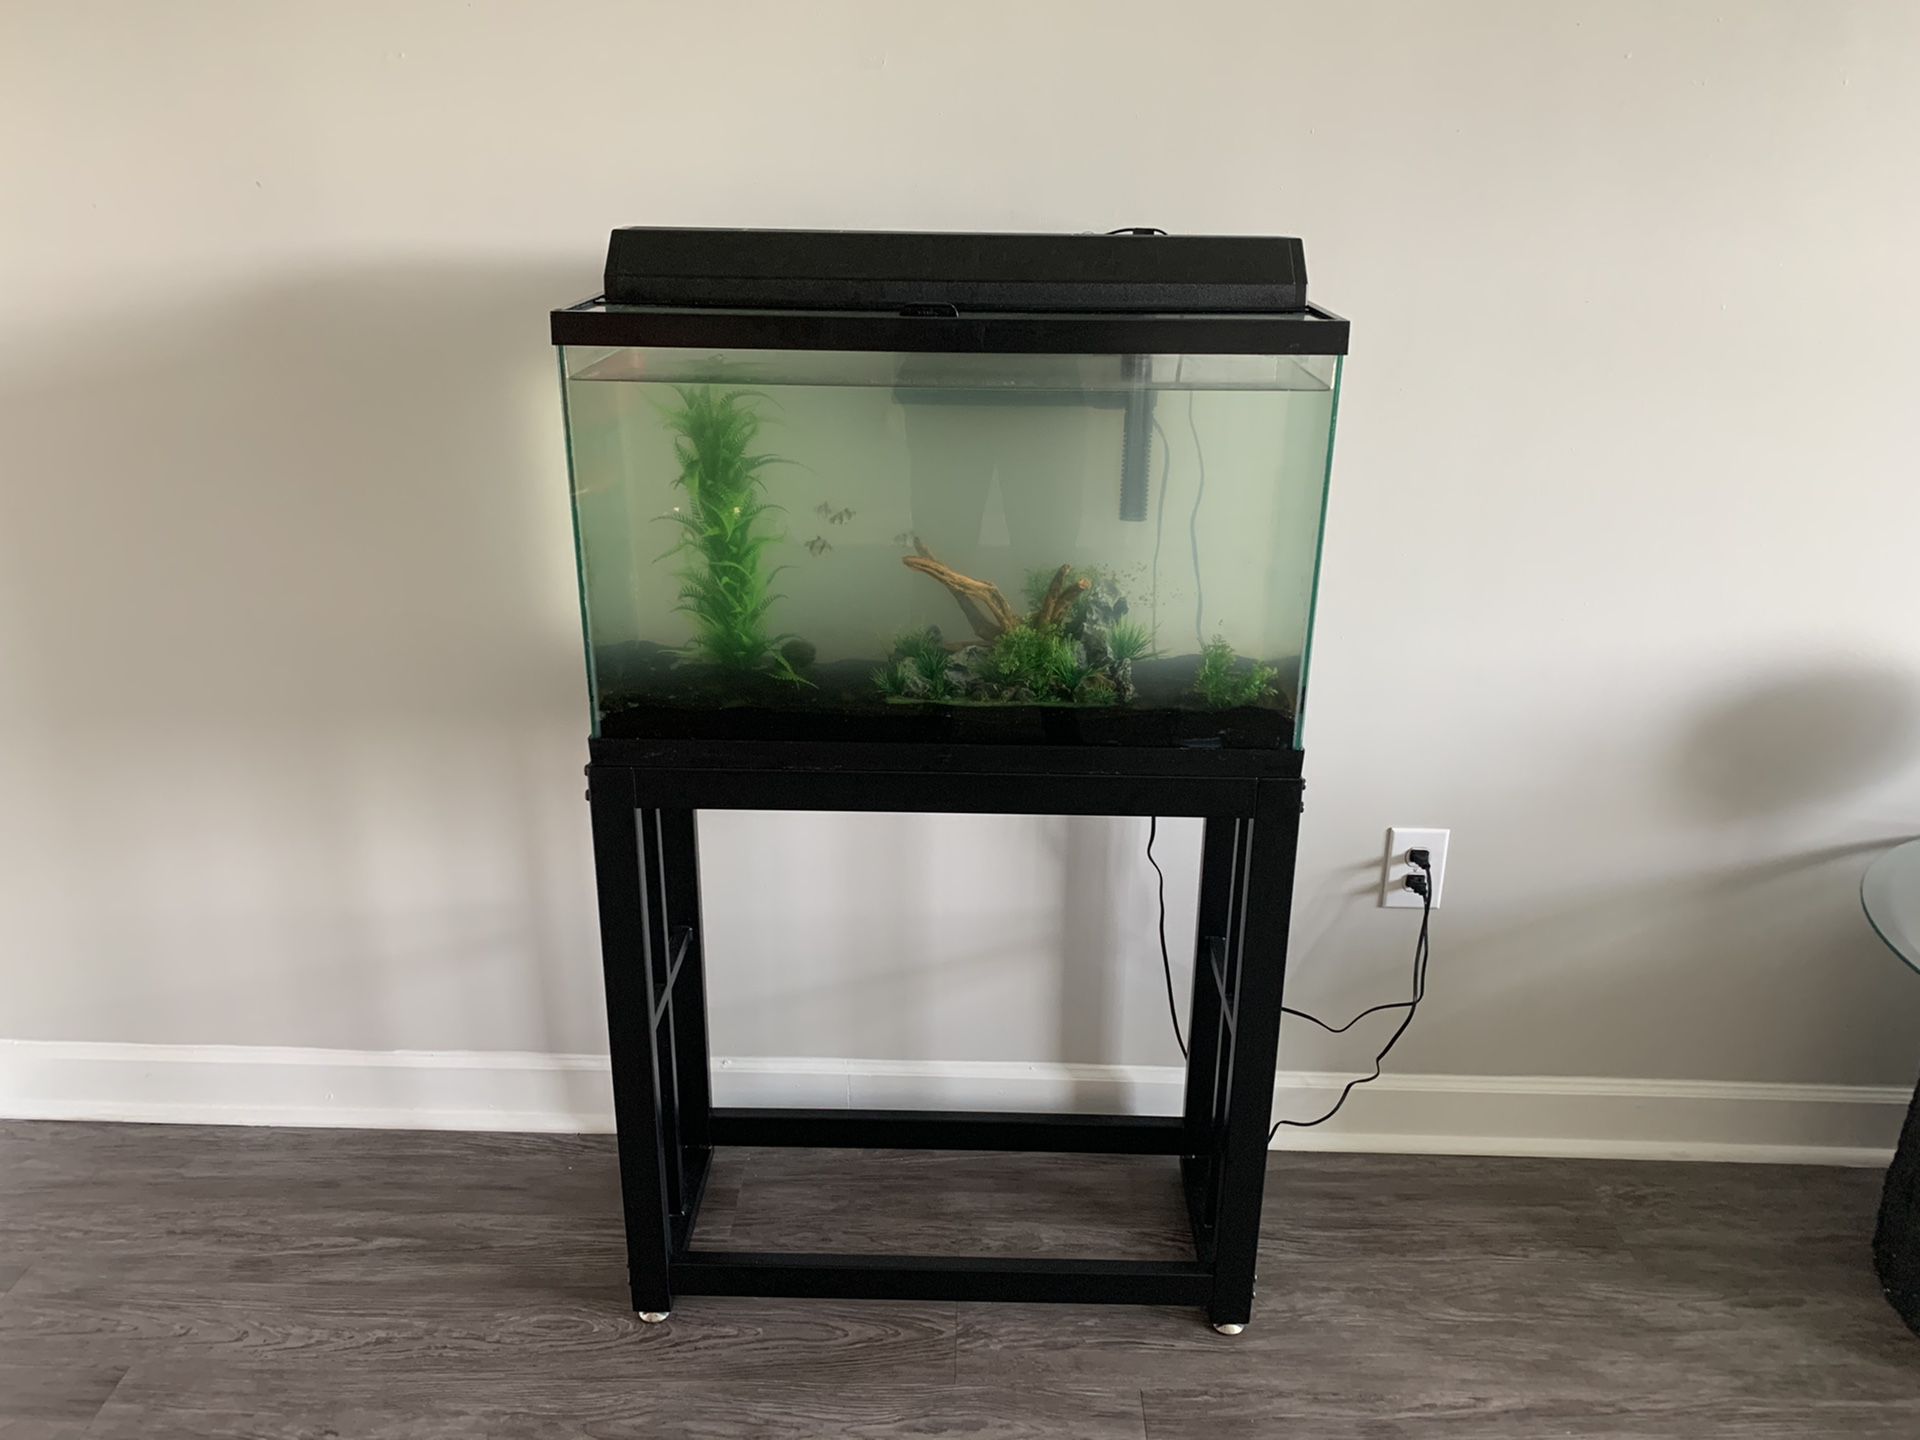 30 Gal Fish Tank w/Stand & Fish $100/OBO